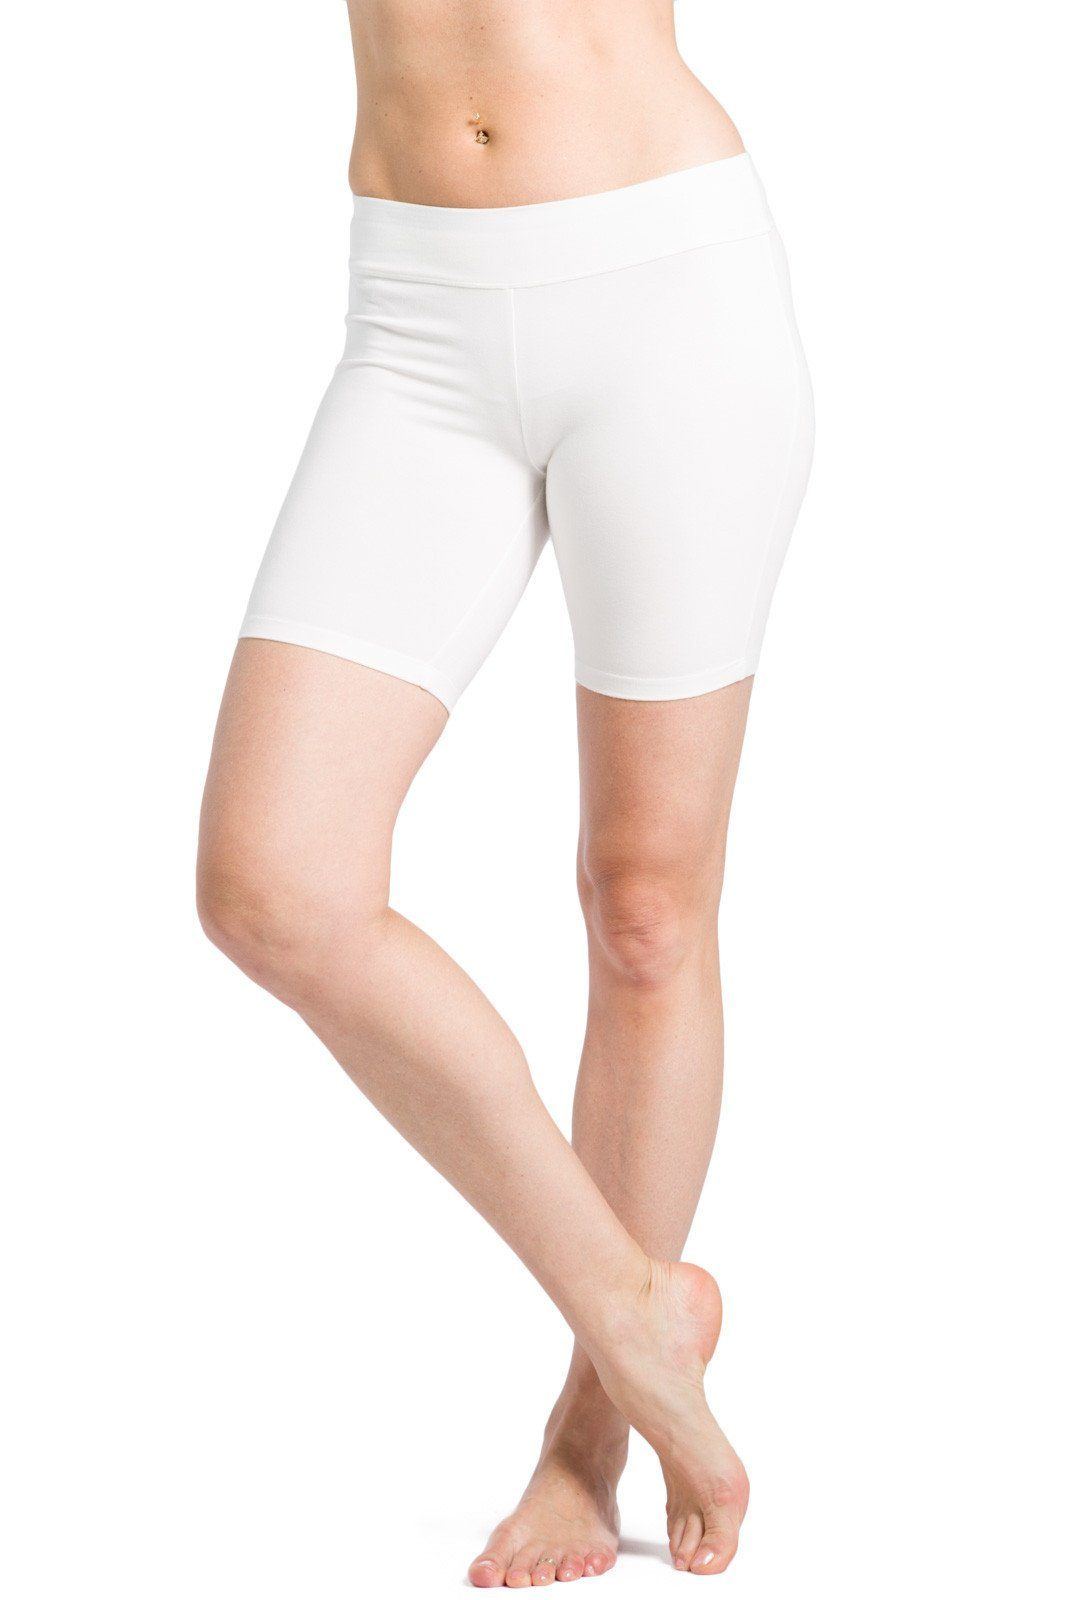 Buy CnlanRow Womens Under Skirt Shorts Soft Thin Stretch Short Leggings  Fitness Yoga Shorts at Amazon.in